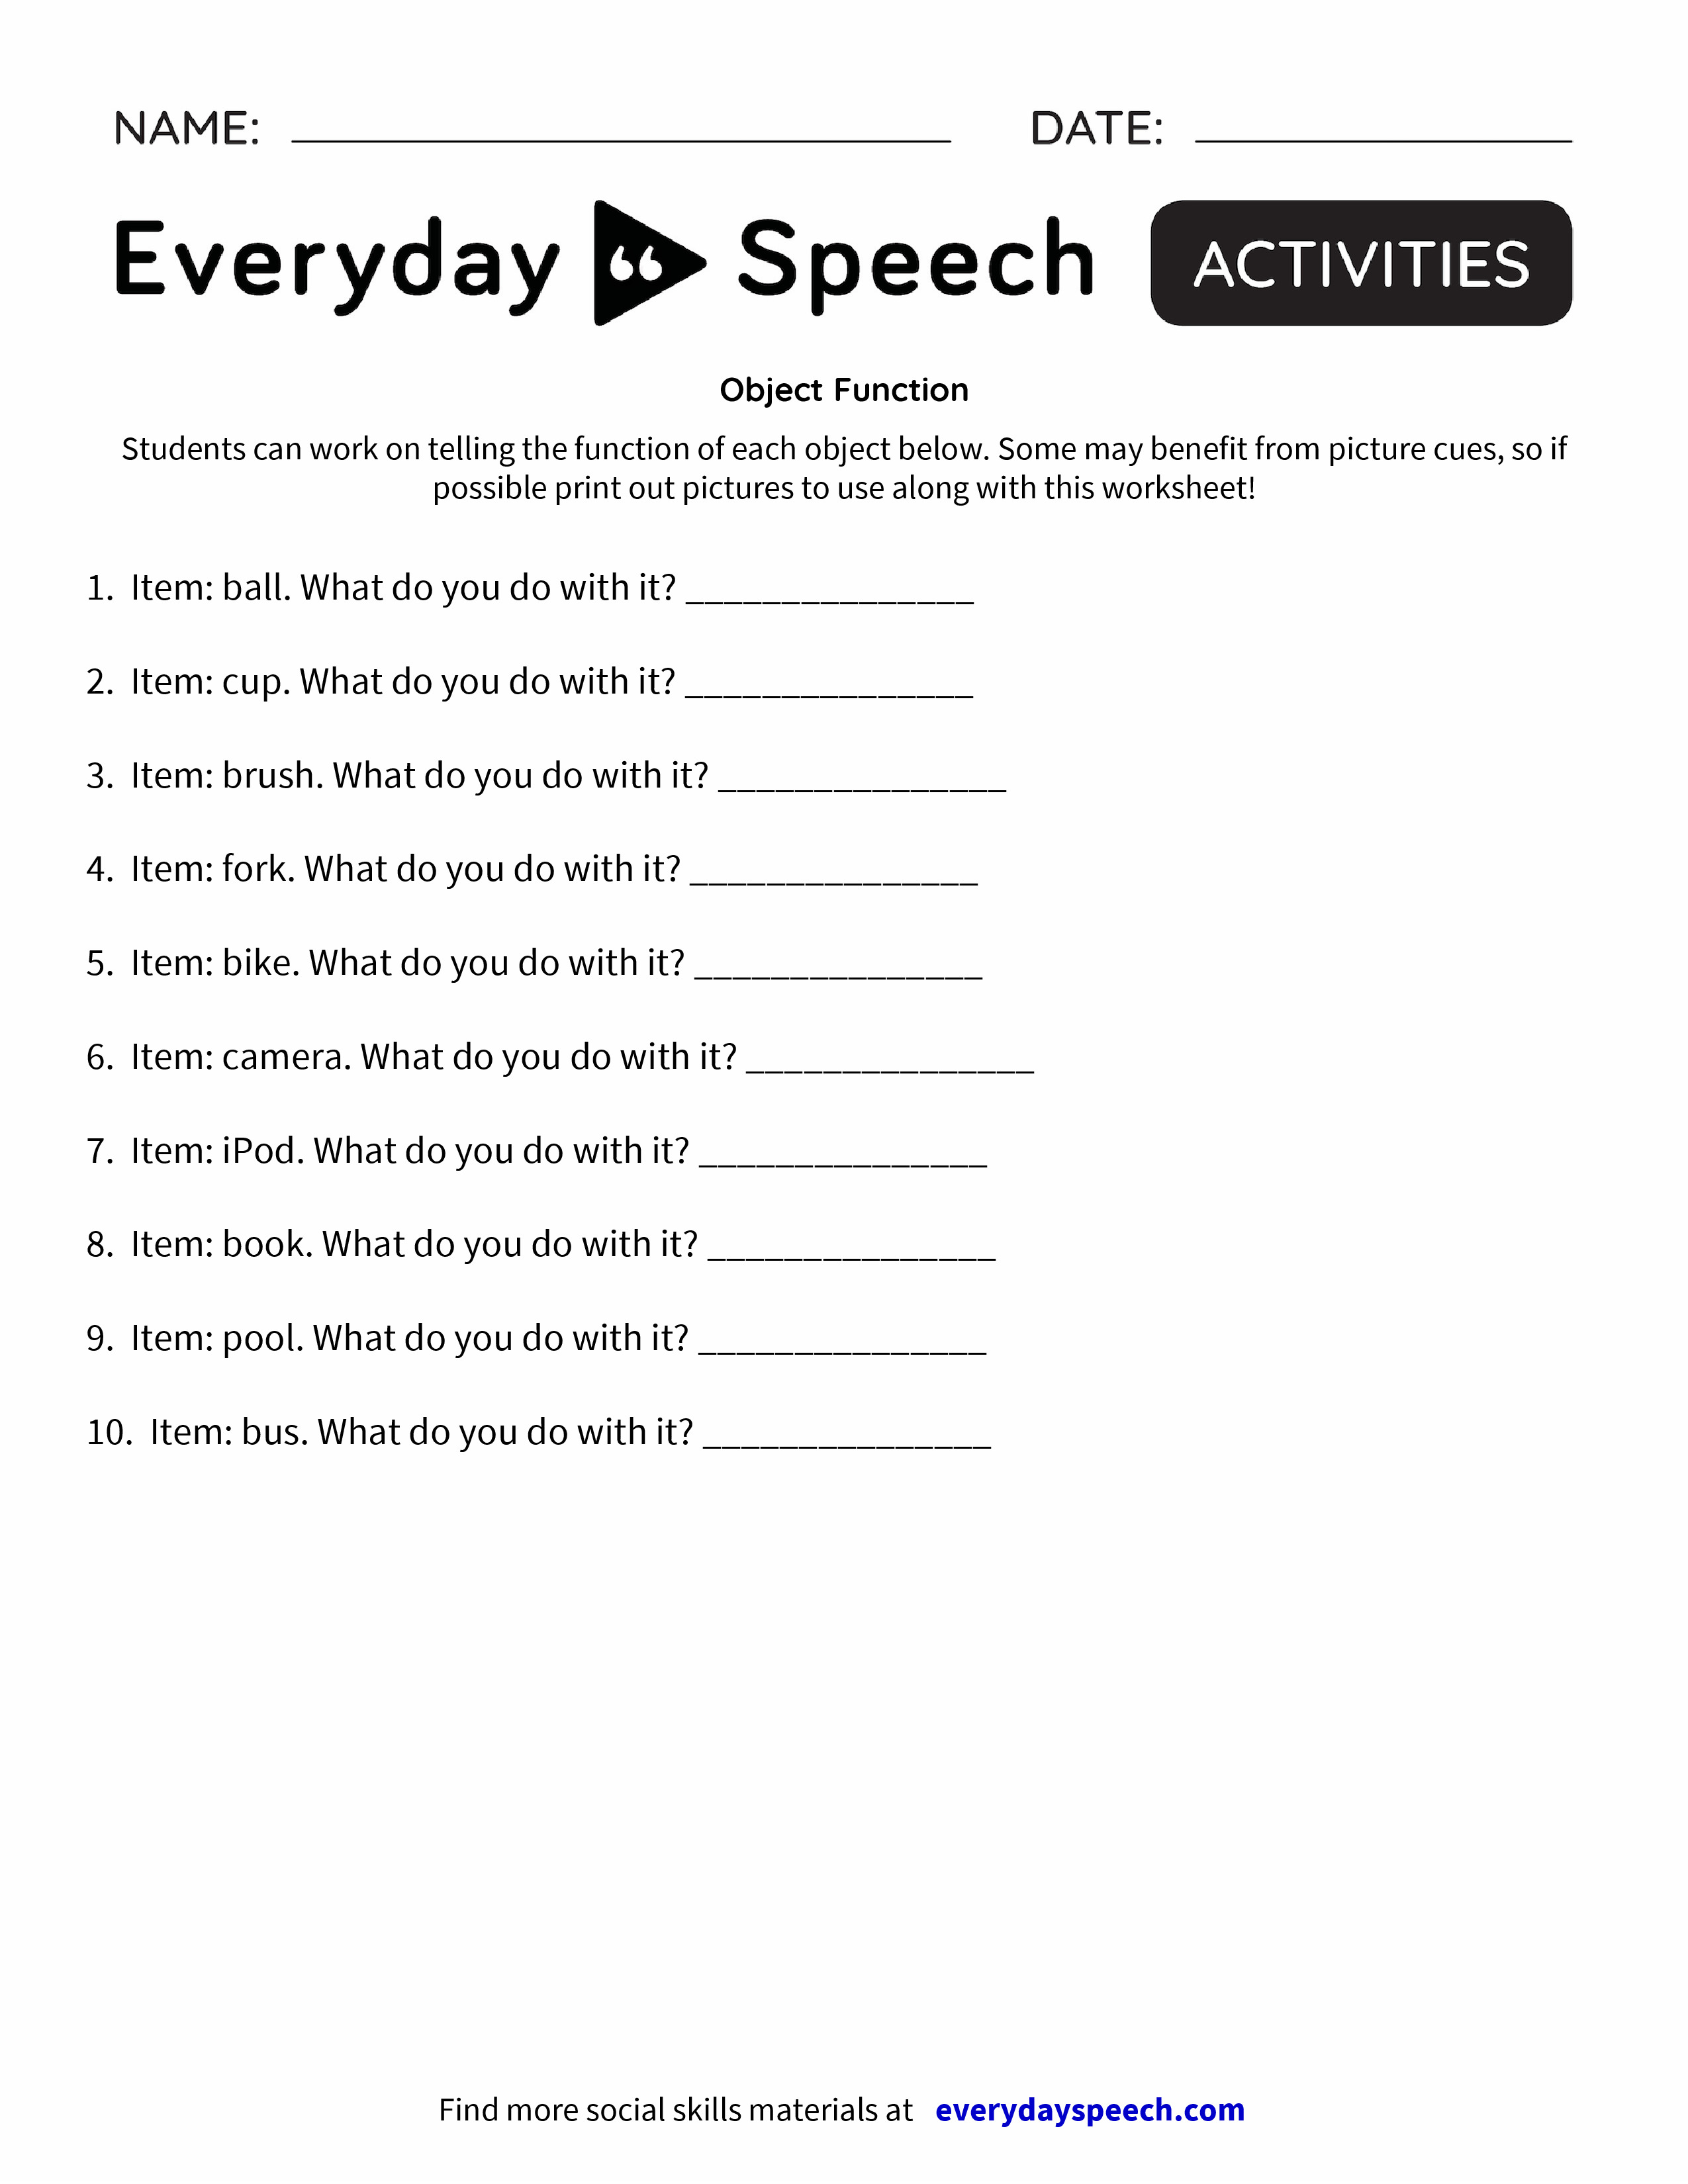 object function everyday speech everyday speech